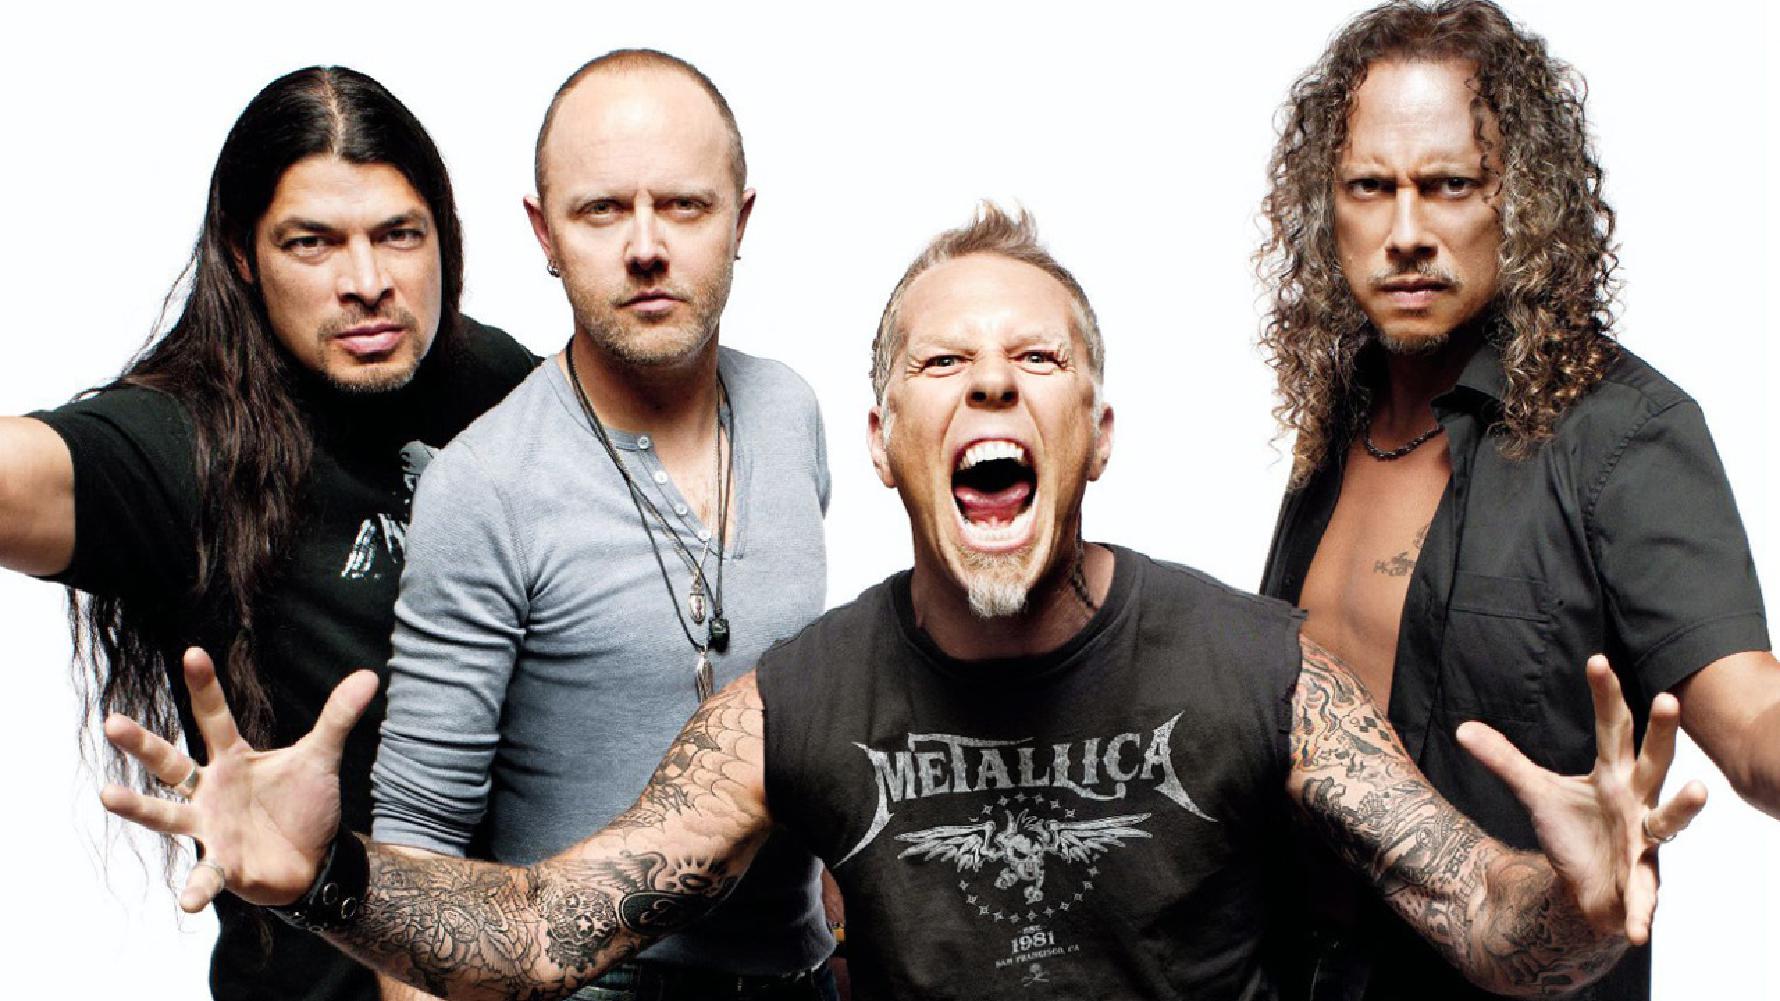 Metallica Biljetter